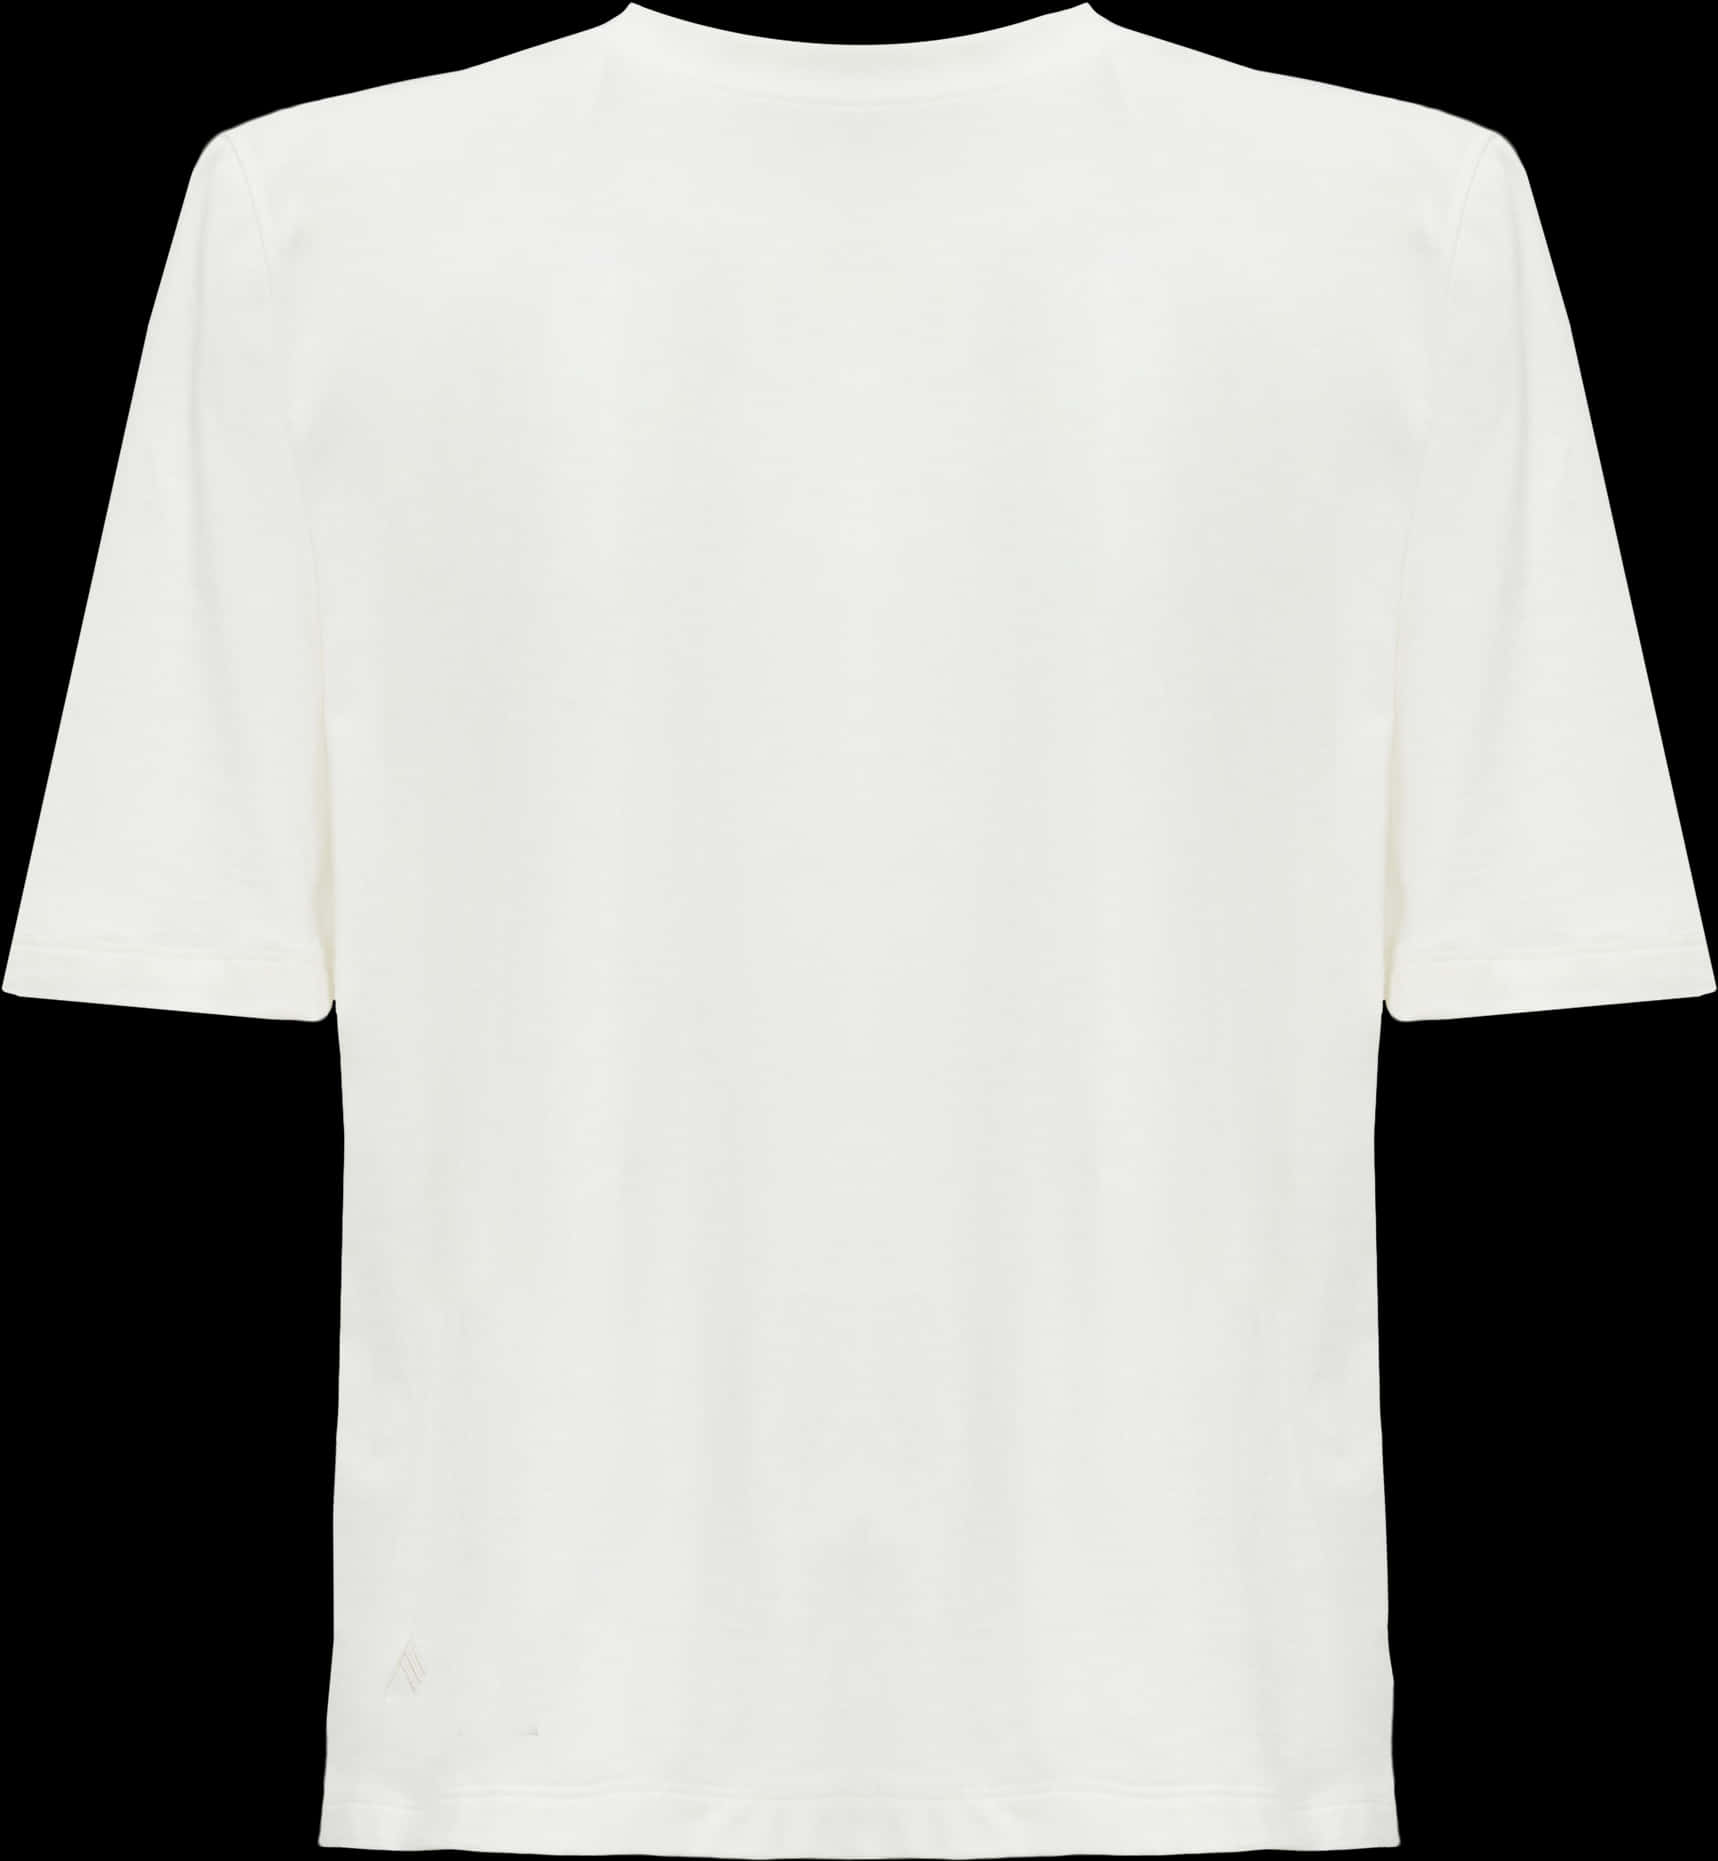 Plain White T Shirt Front View PNG